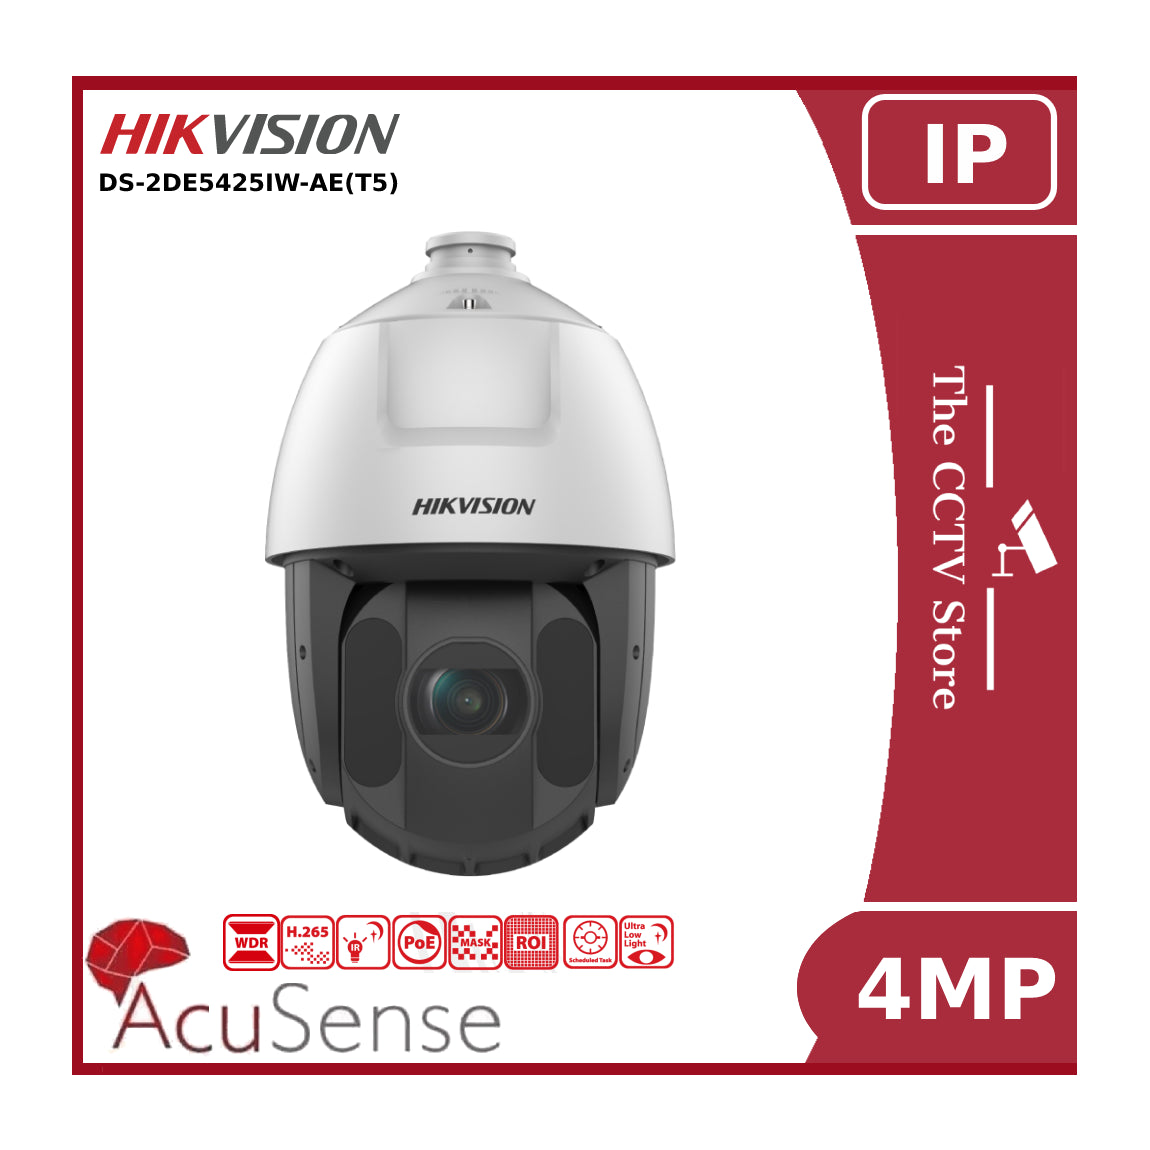 4MP Hikvision PTZ DS-2DE5425IW-AE (T5) 25x Zoom IP Network PTZ Camera, 150m Smart IR